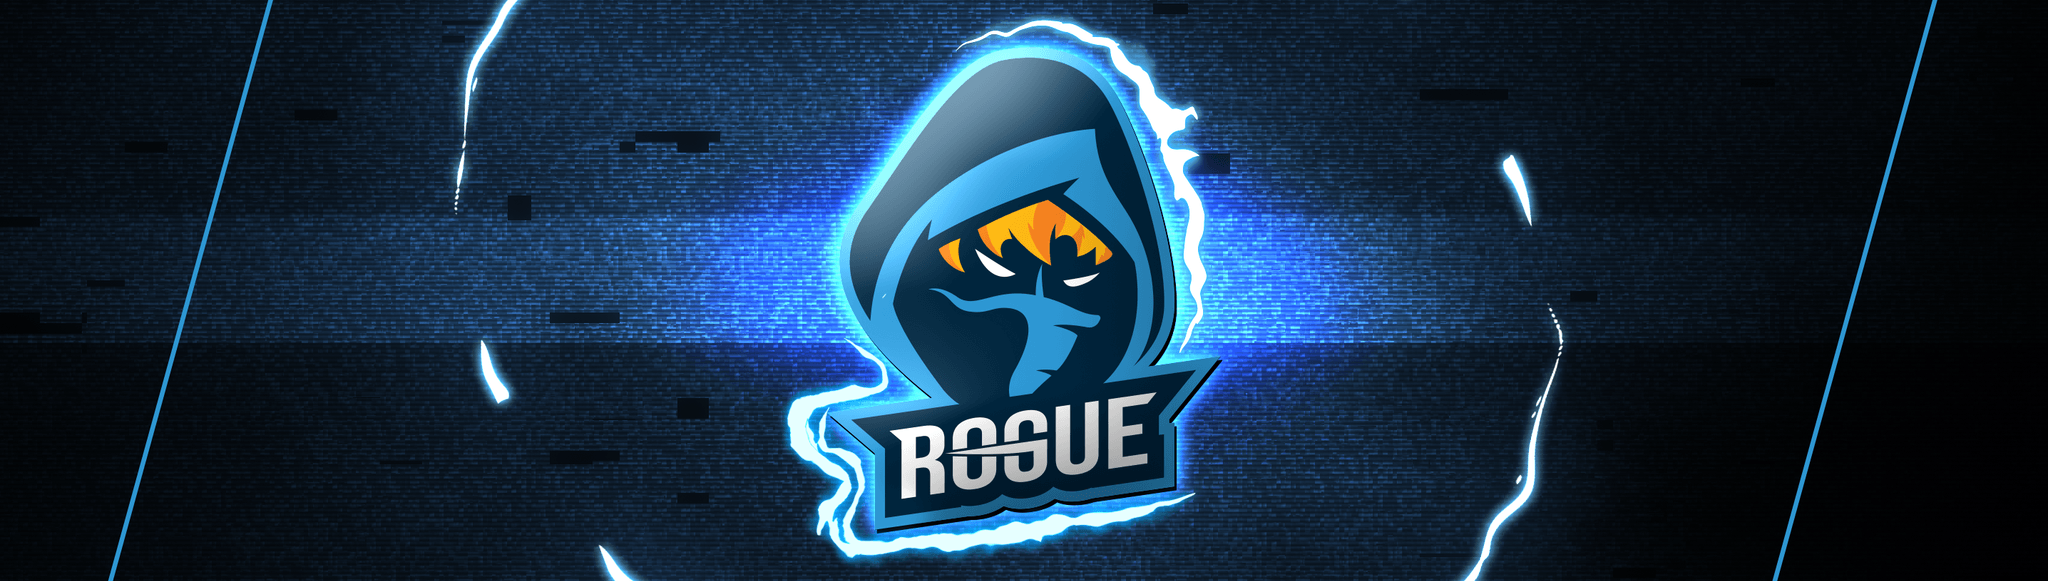 Rogue Logo - ROGUE – MetaThreads